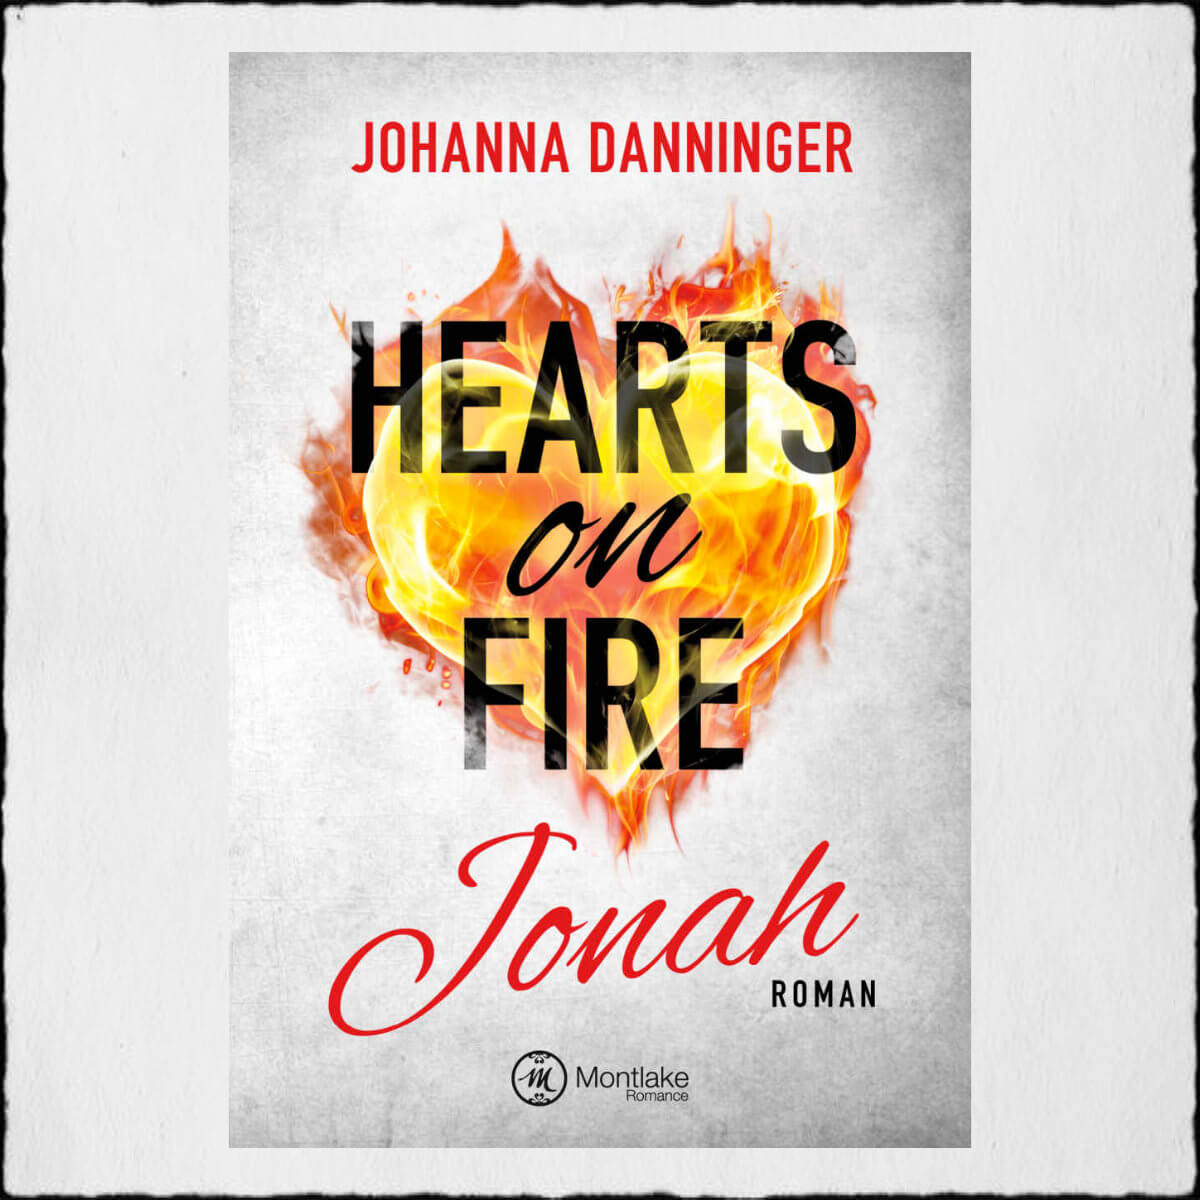 Johanna Danninger "Jonah - Hearts of Fire Band 1" ©  2019 Montlake Romance